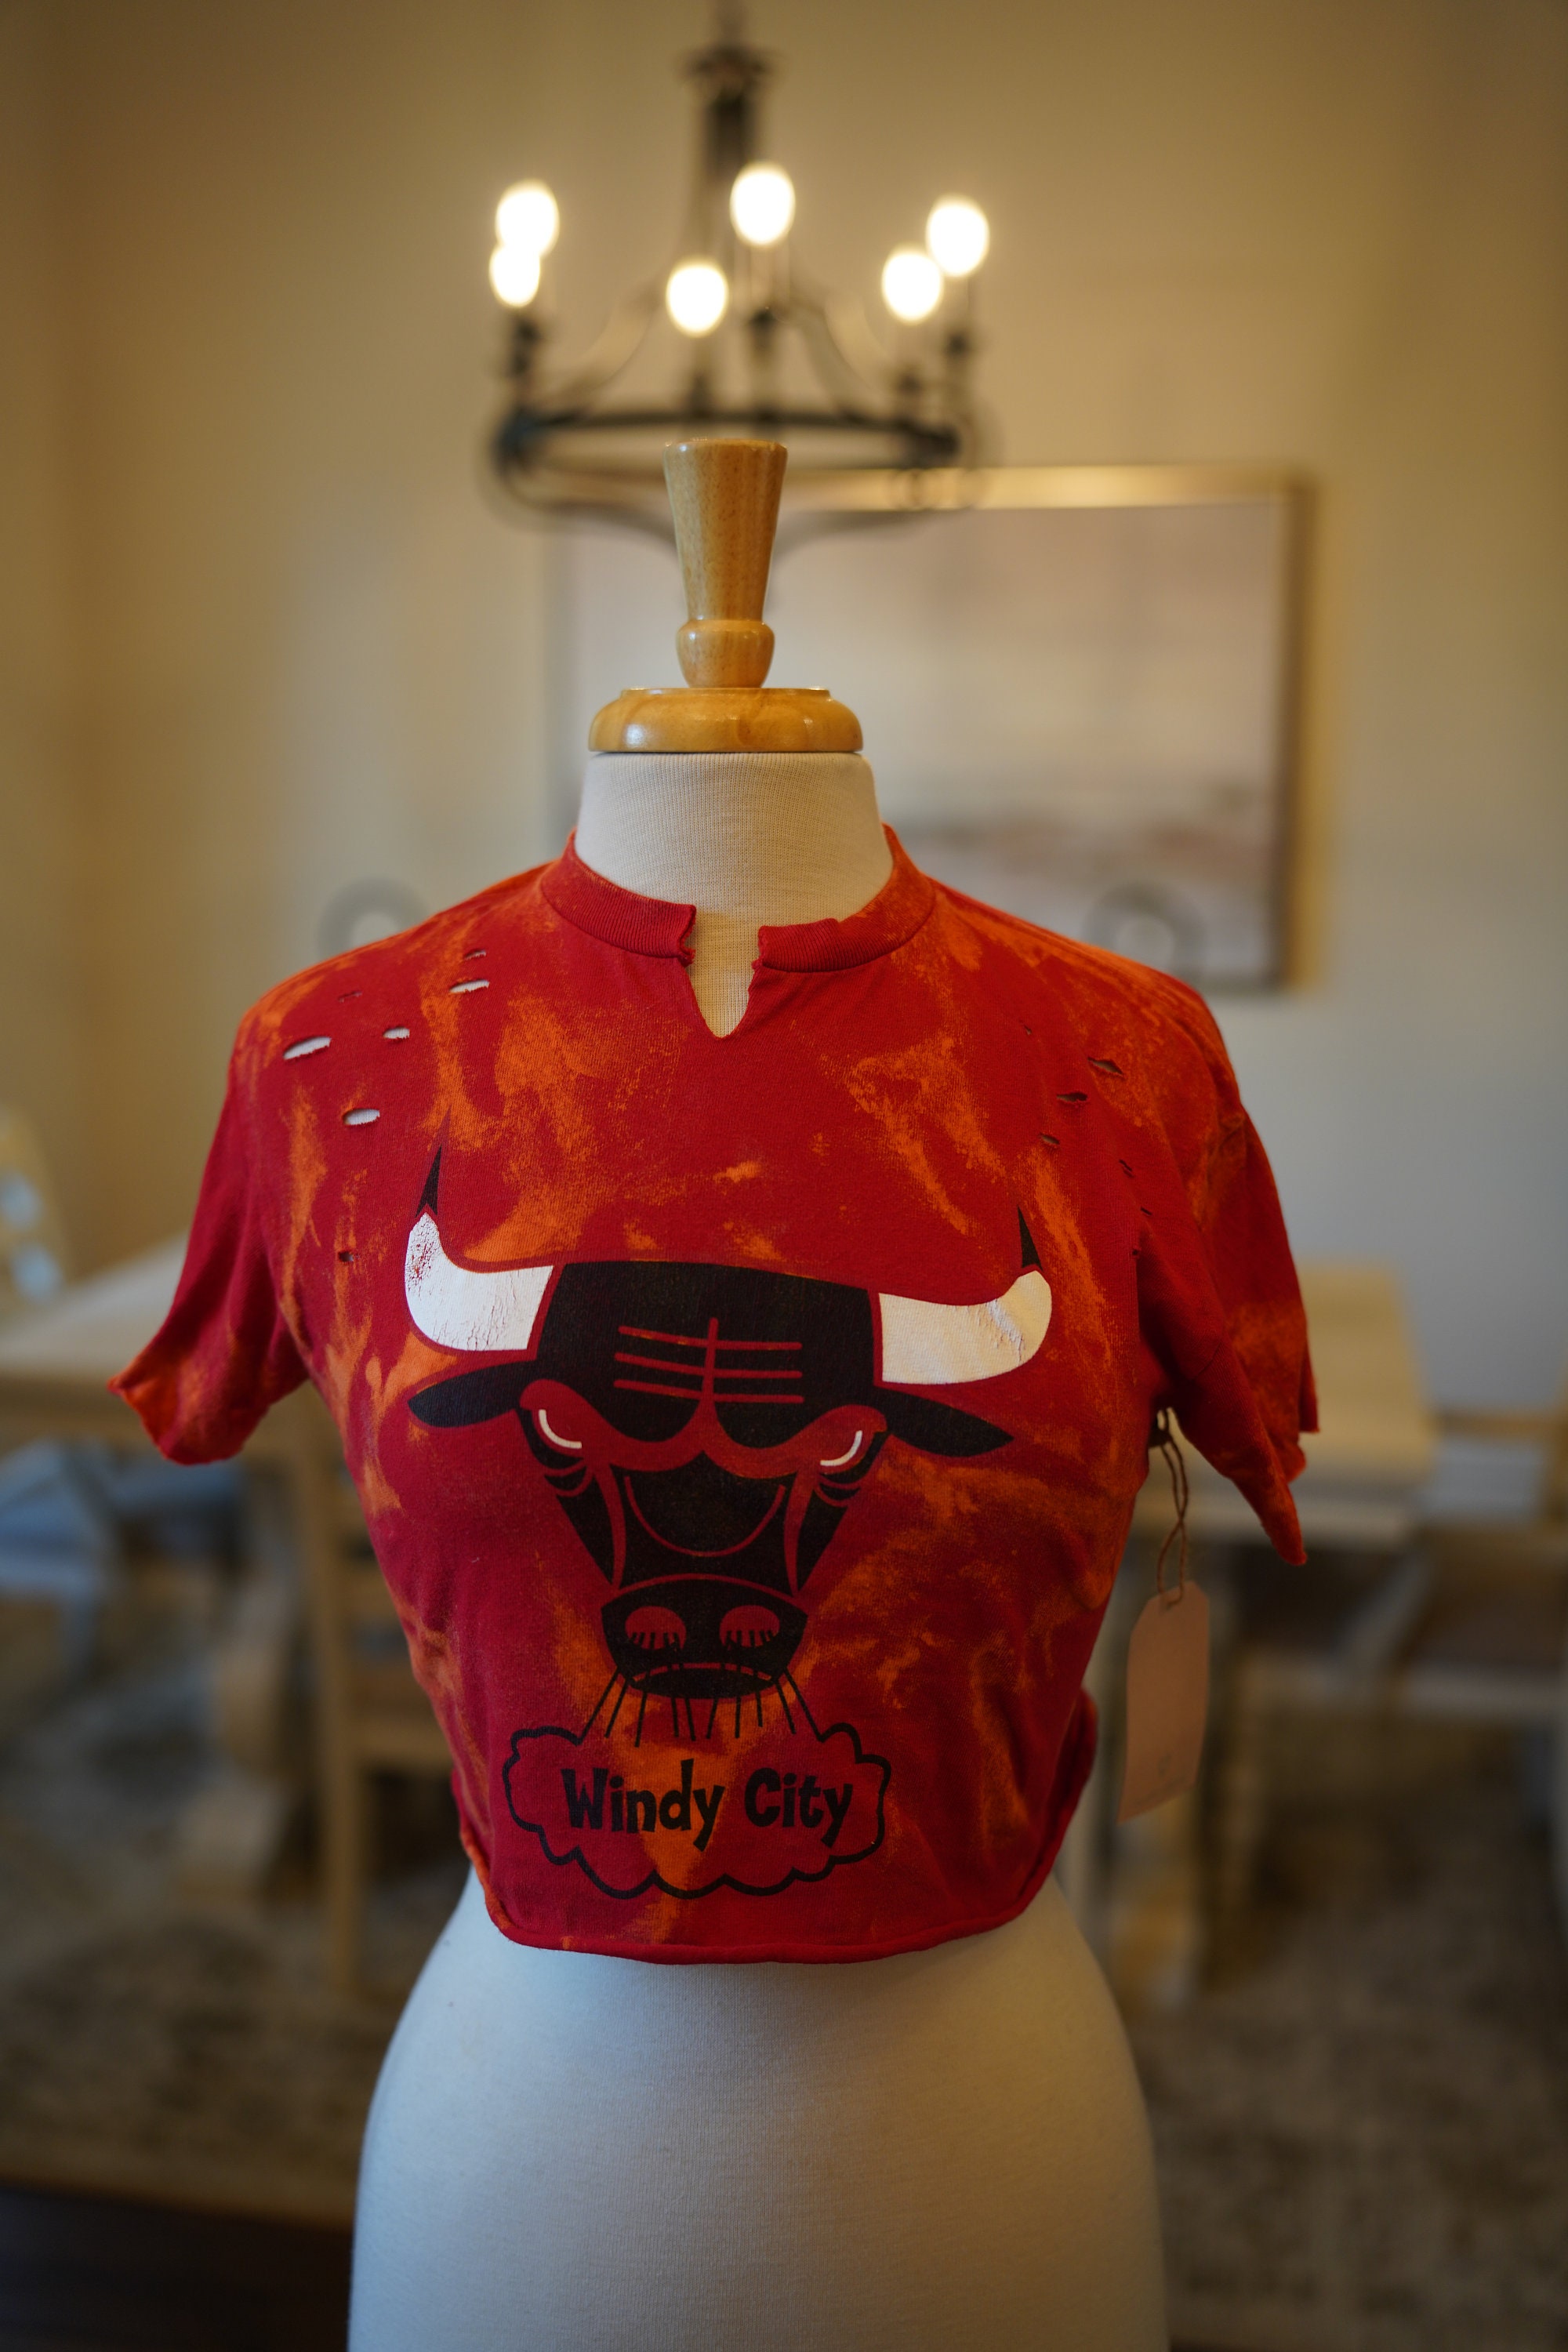 47 Chicago Bulls Ladies Upstage Kennedy Cropped Crew Sweatshirt Large